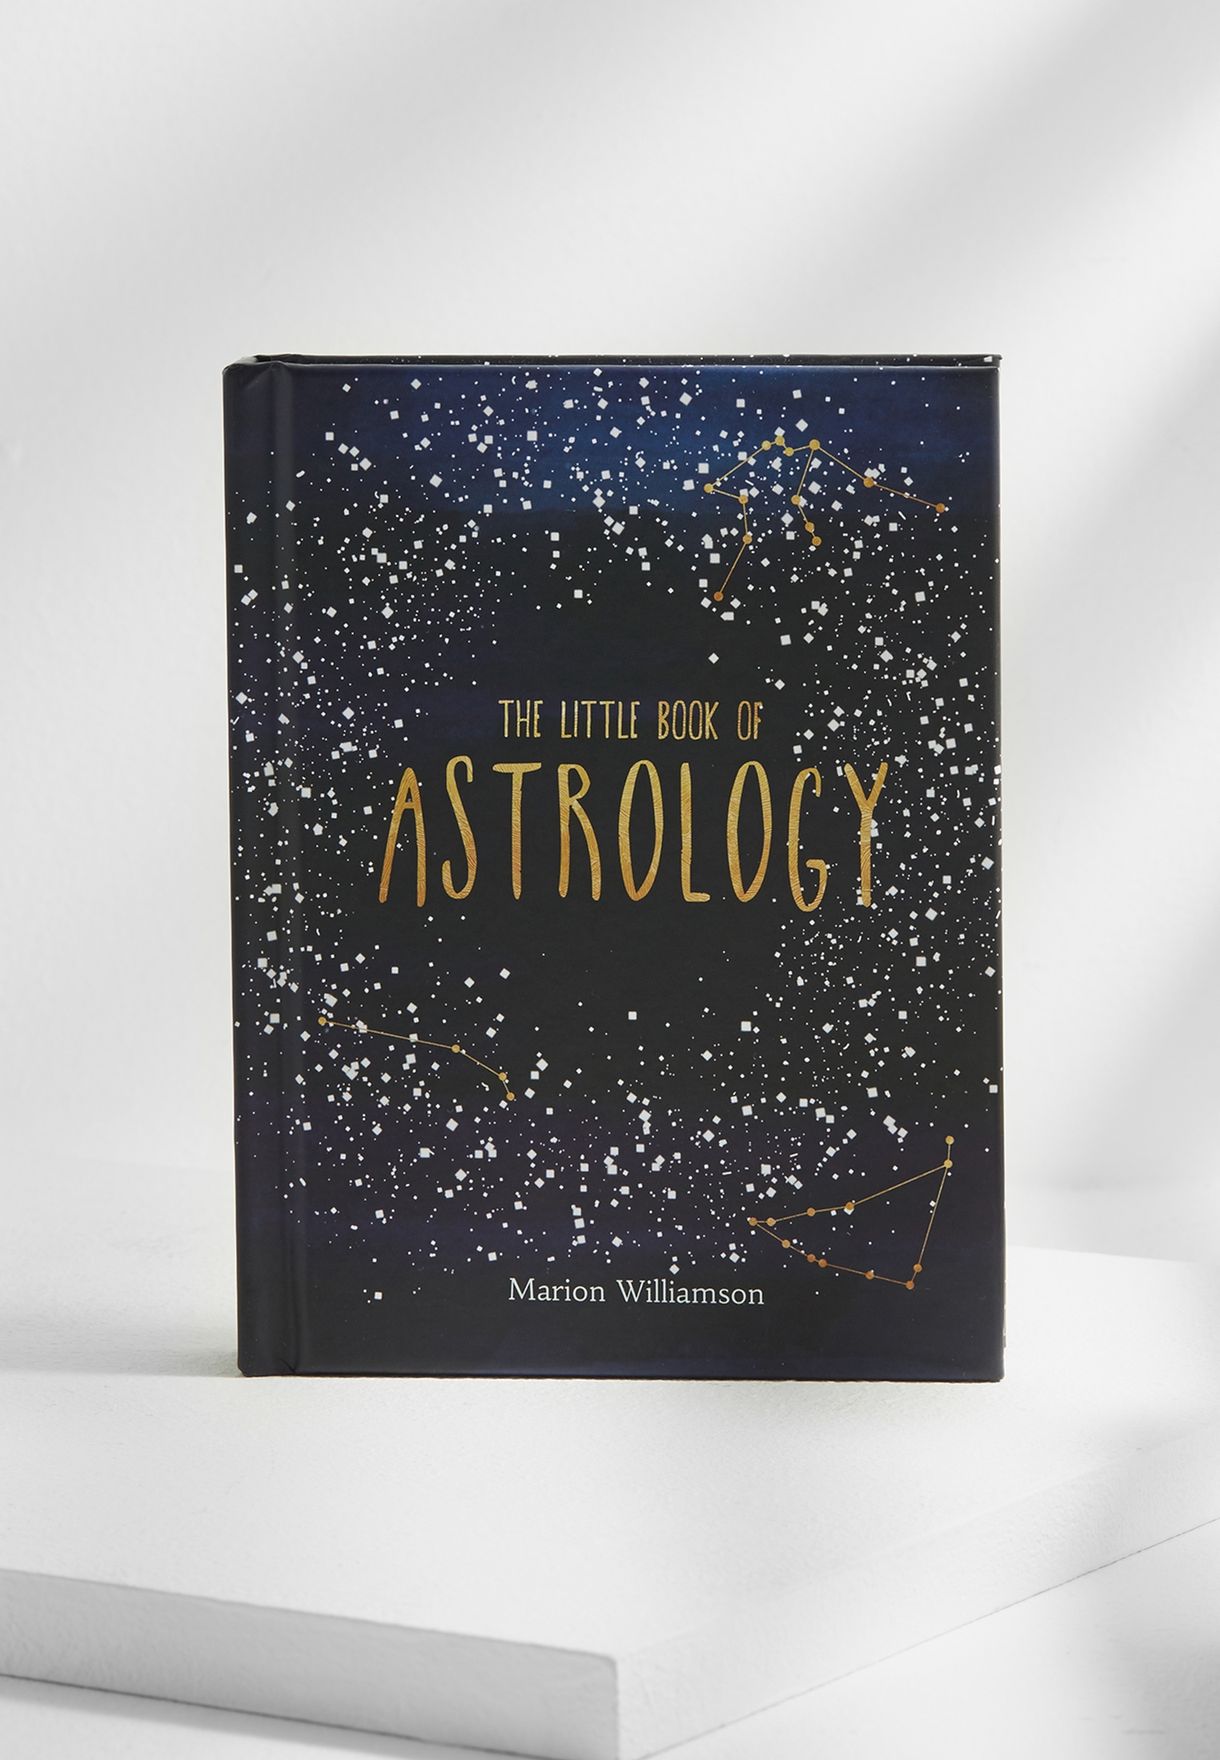 Astrology Book